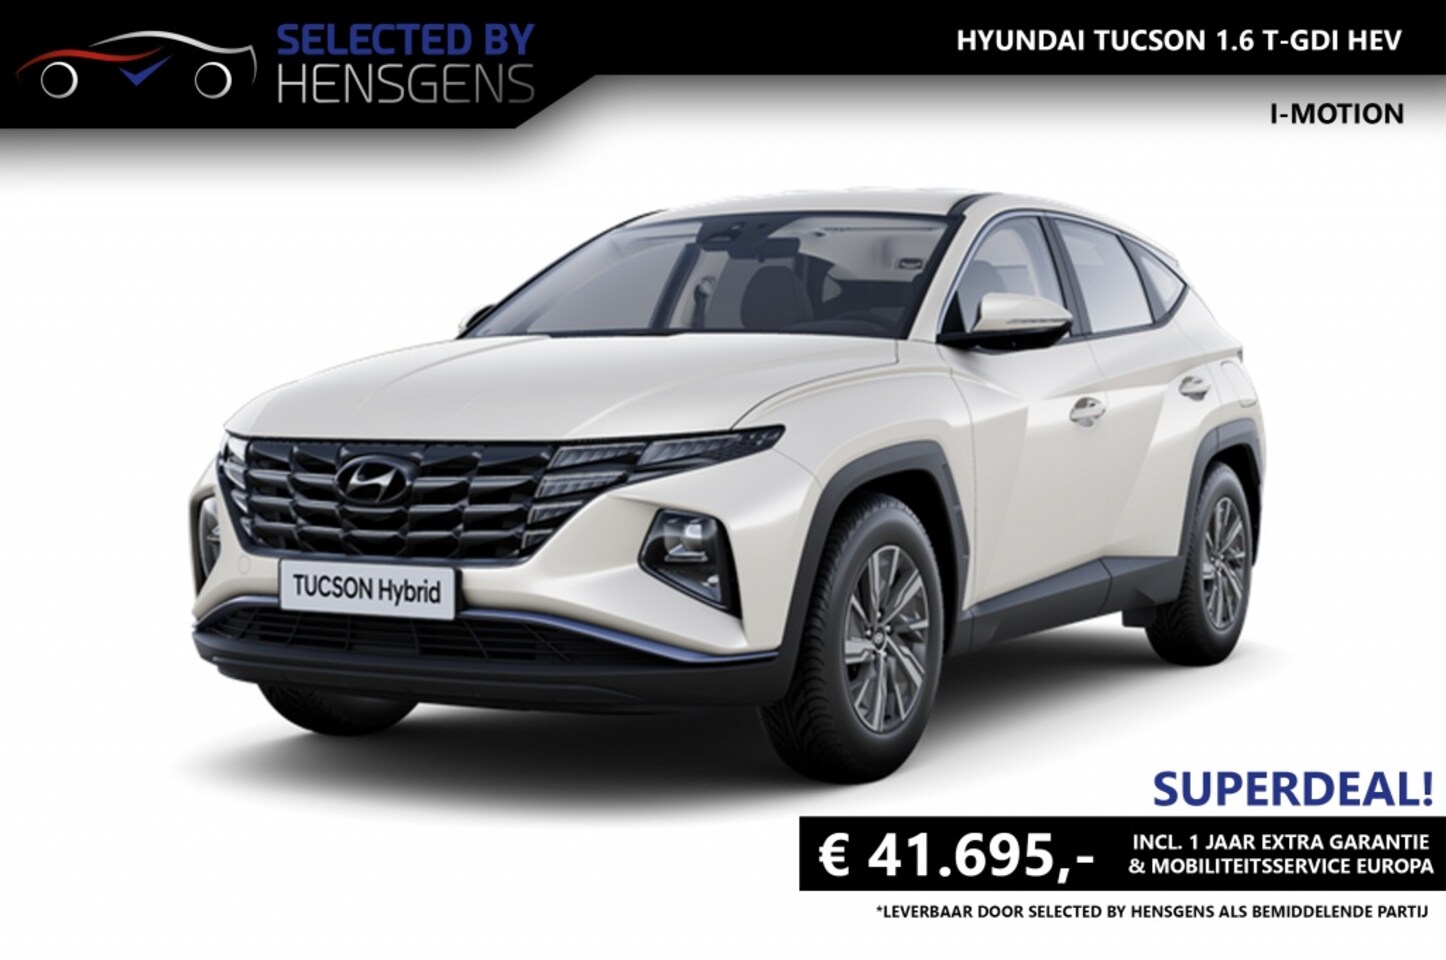 Hyundai Tucson - 1.6 T-GDI HEV i-Motion 1.6 T-GDI HEV i-Motion - AutoWereld.nl